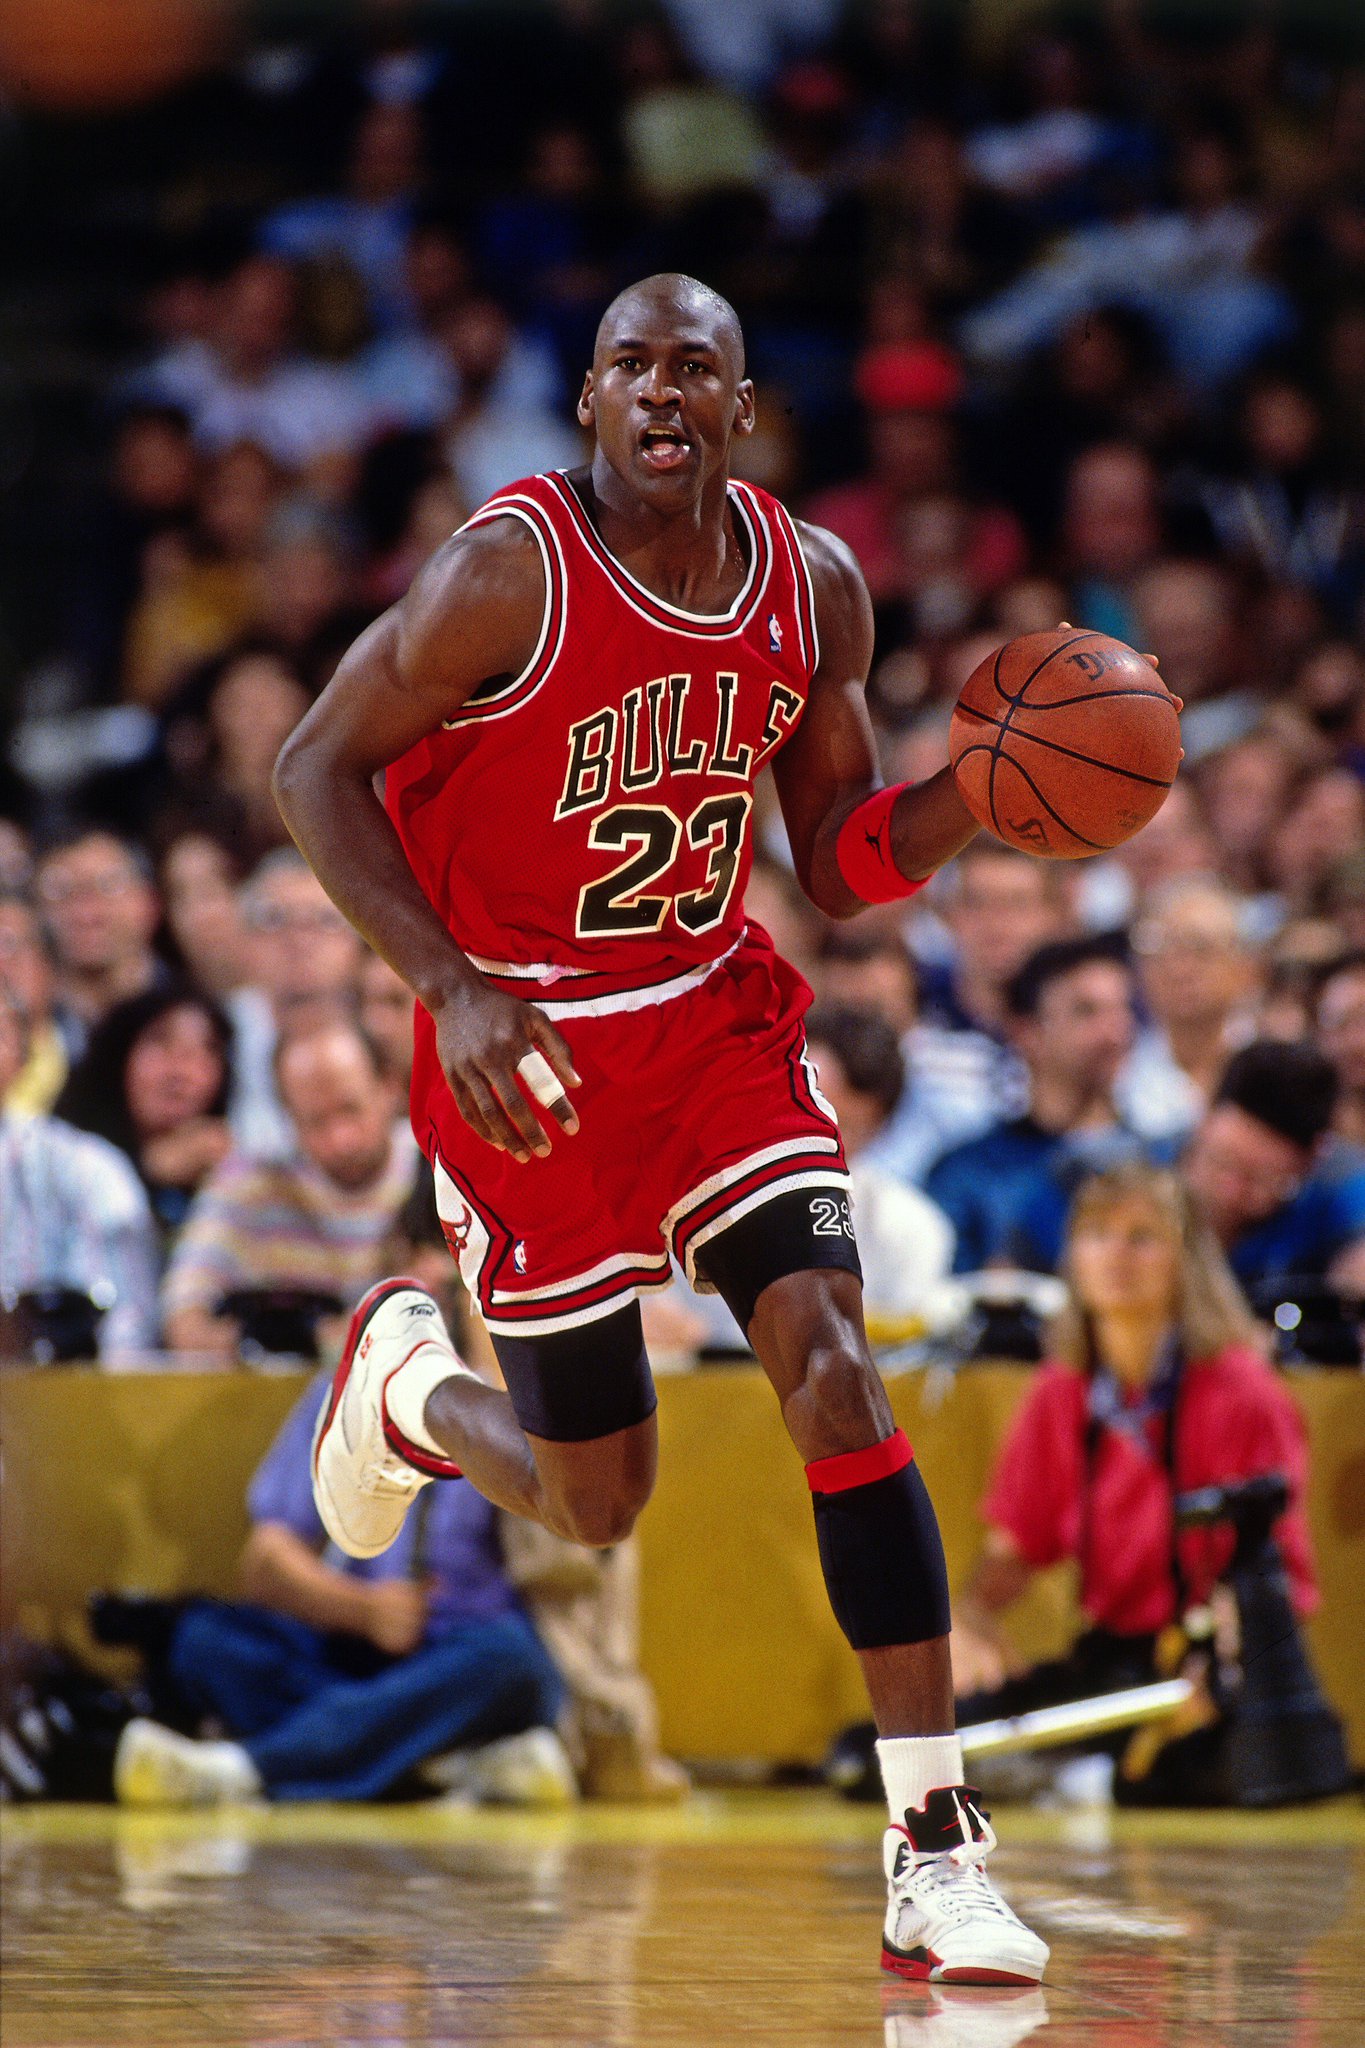 NBA Fantasy on Twitter: "#OTD in the 1991 #NBAPlayoffs, Michael Jordan